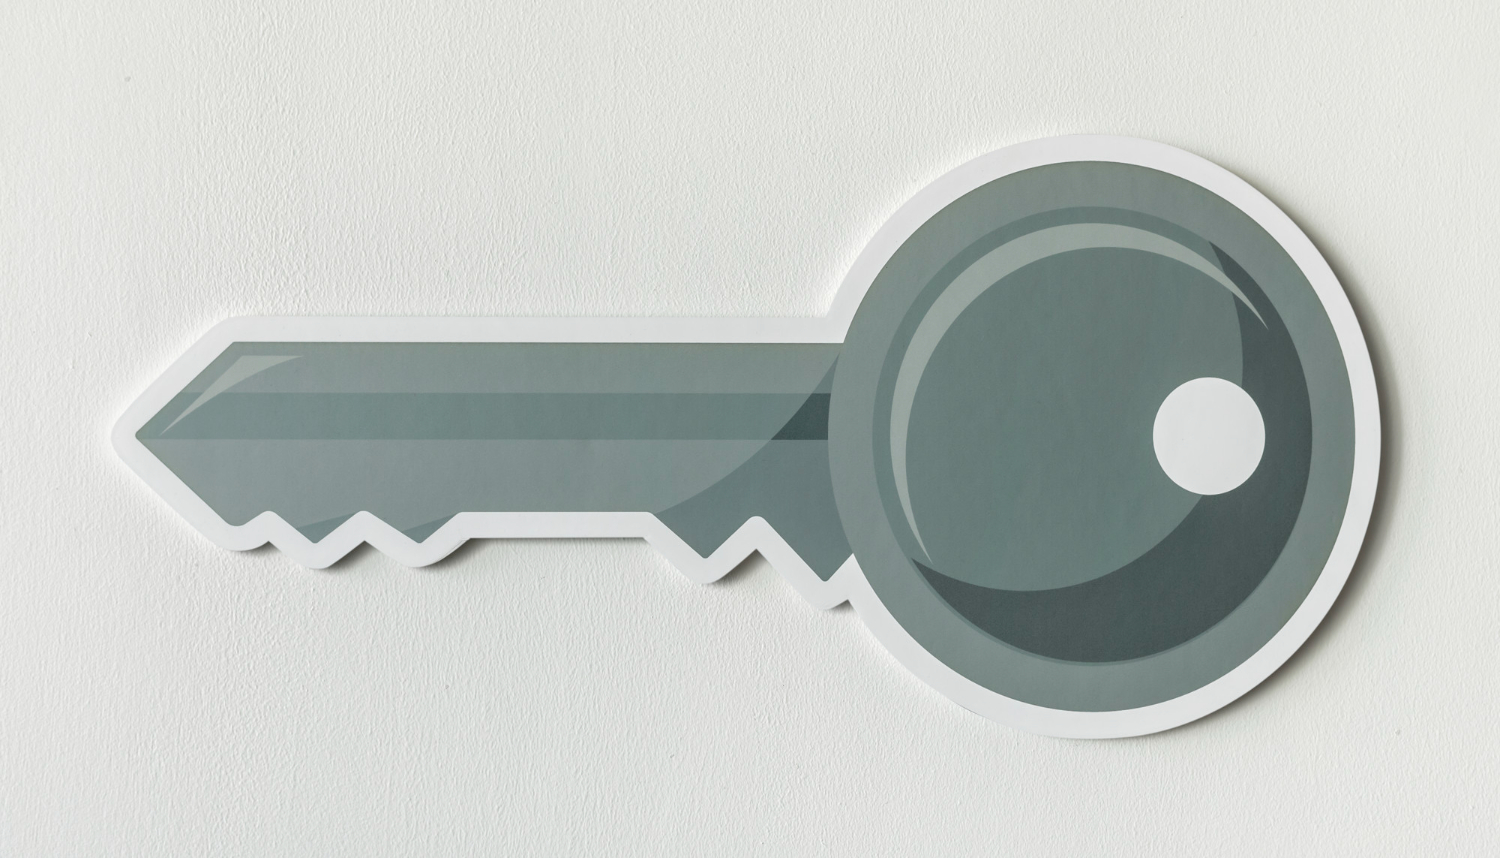 key-security-access-icon-symbol